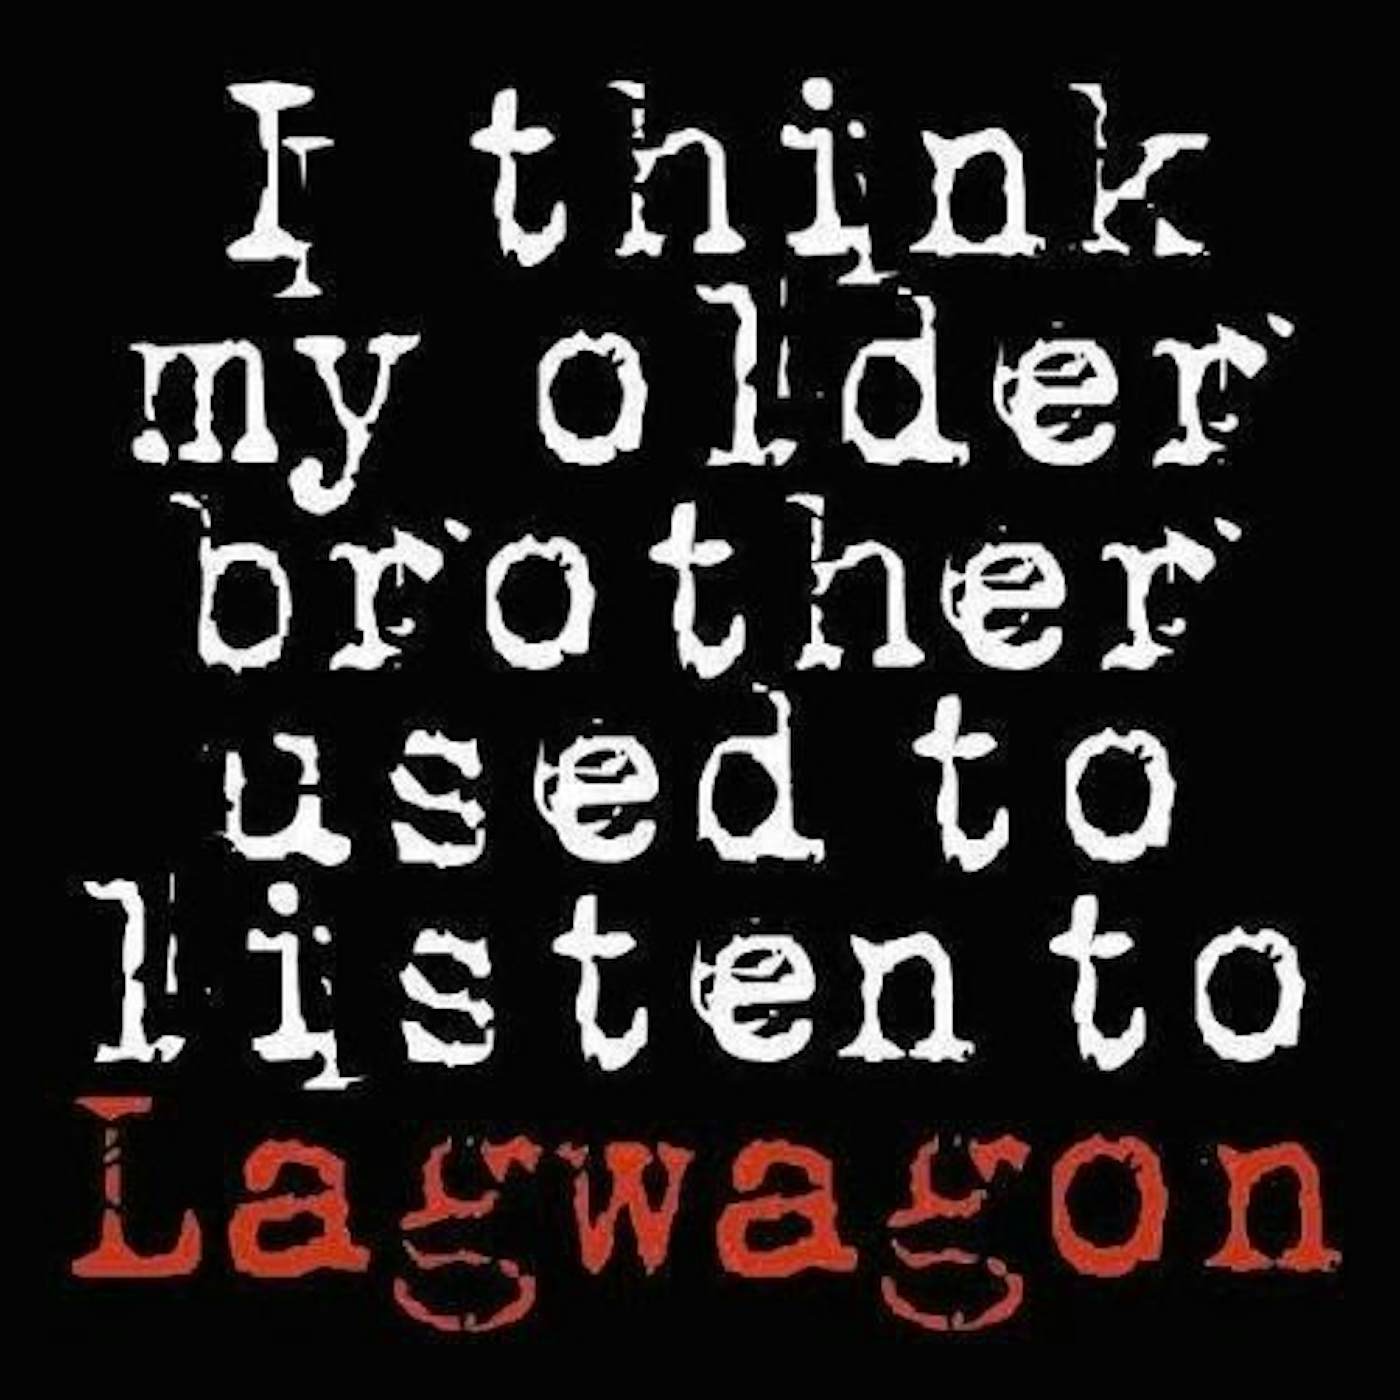 I THINK MY OLDER BROTHER LISTEN TO LAGWAGON Vinyl Record